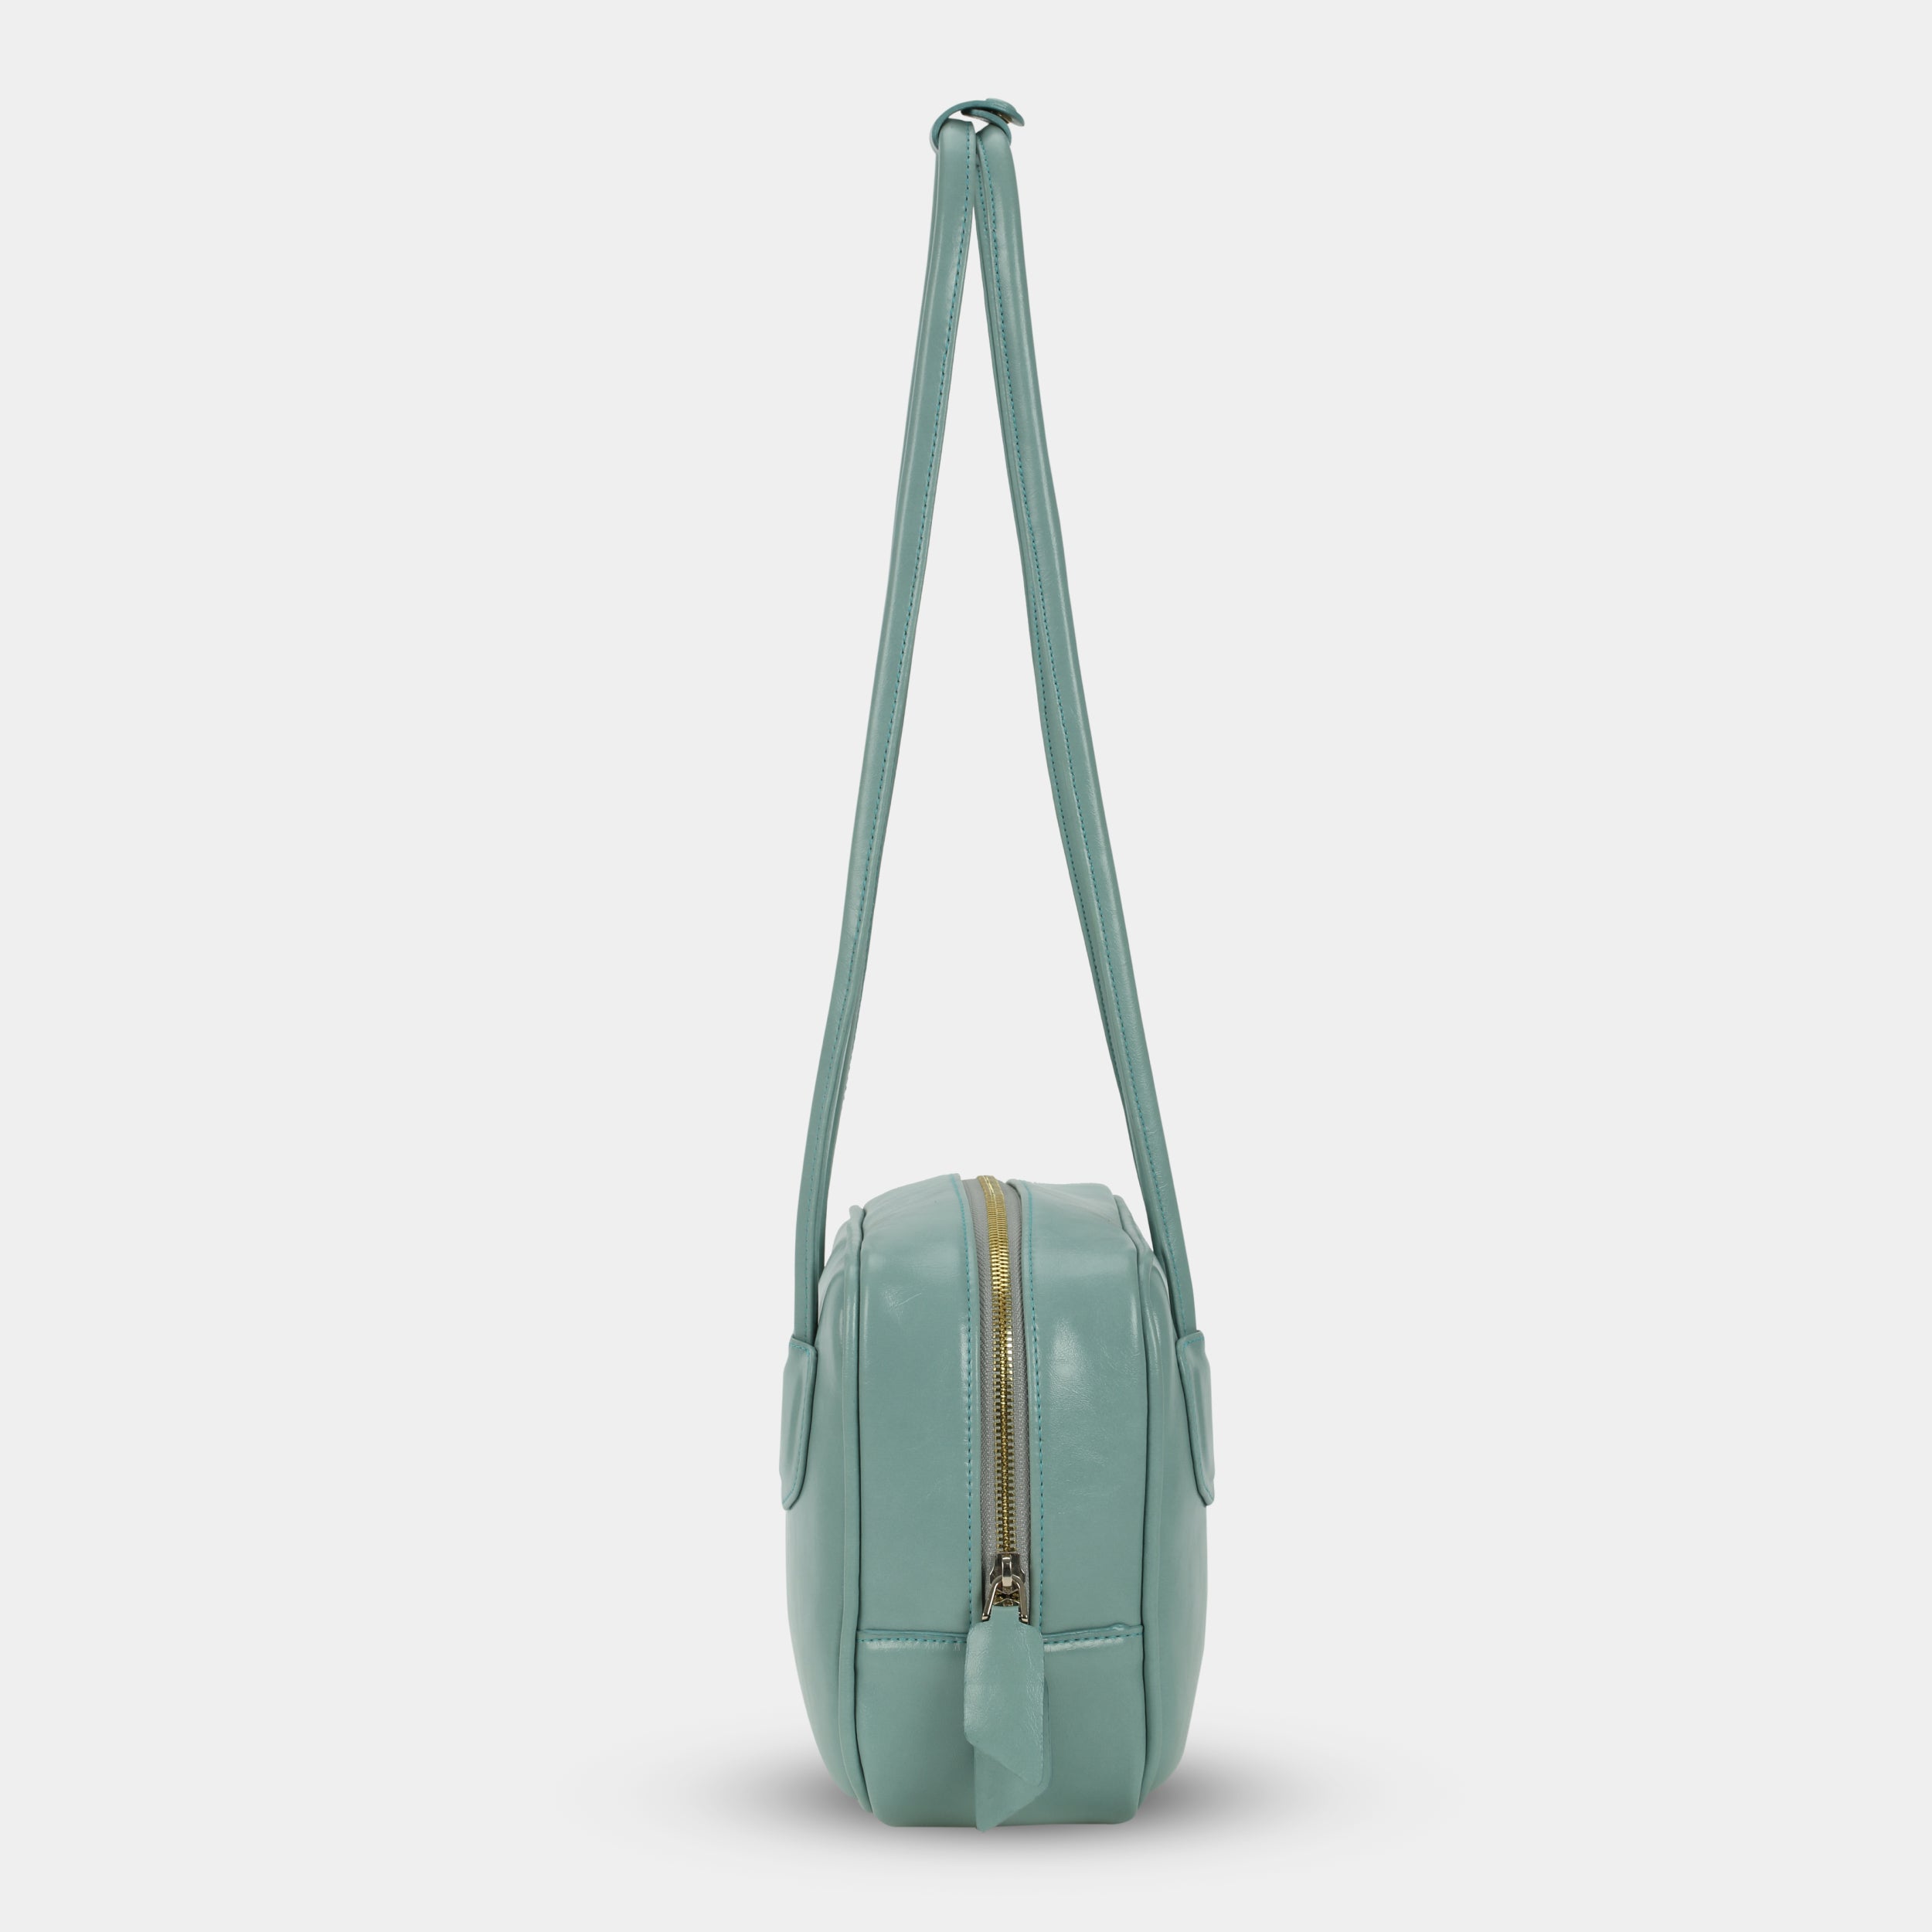 SANDWICH handbag in pastel turquoise